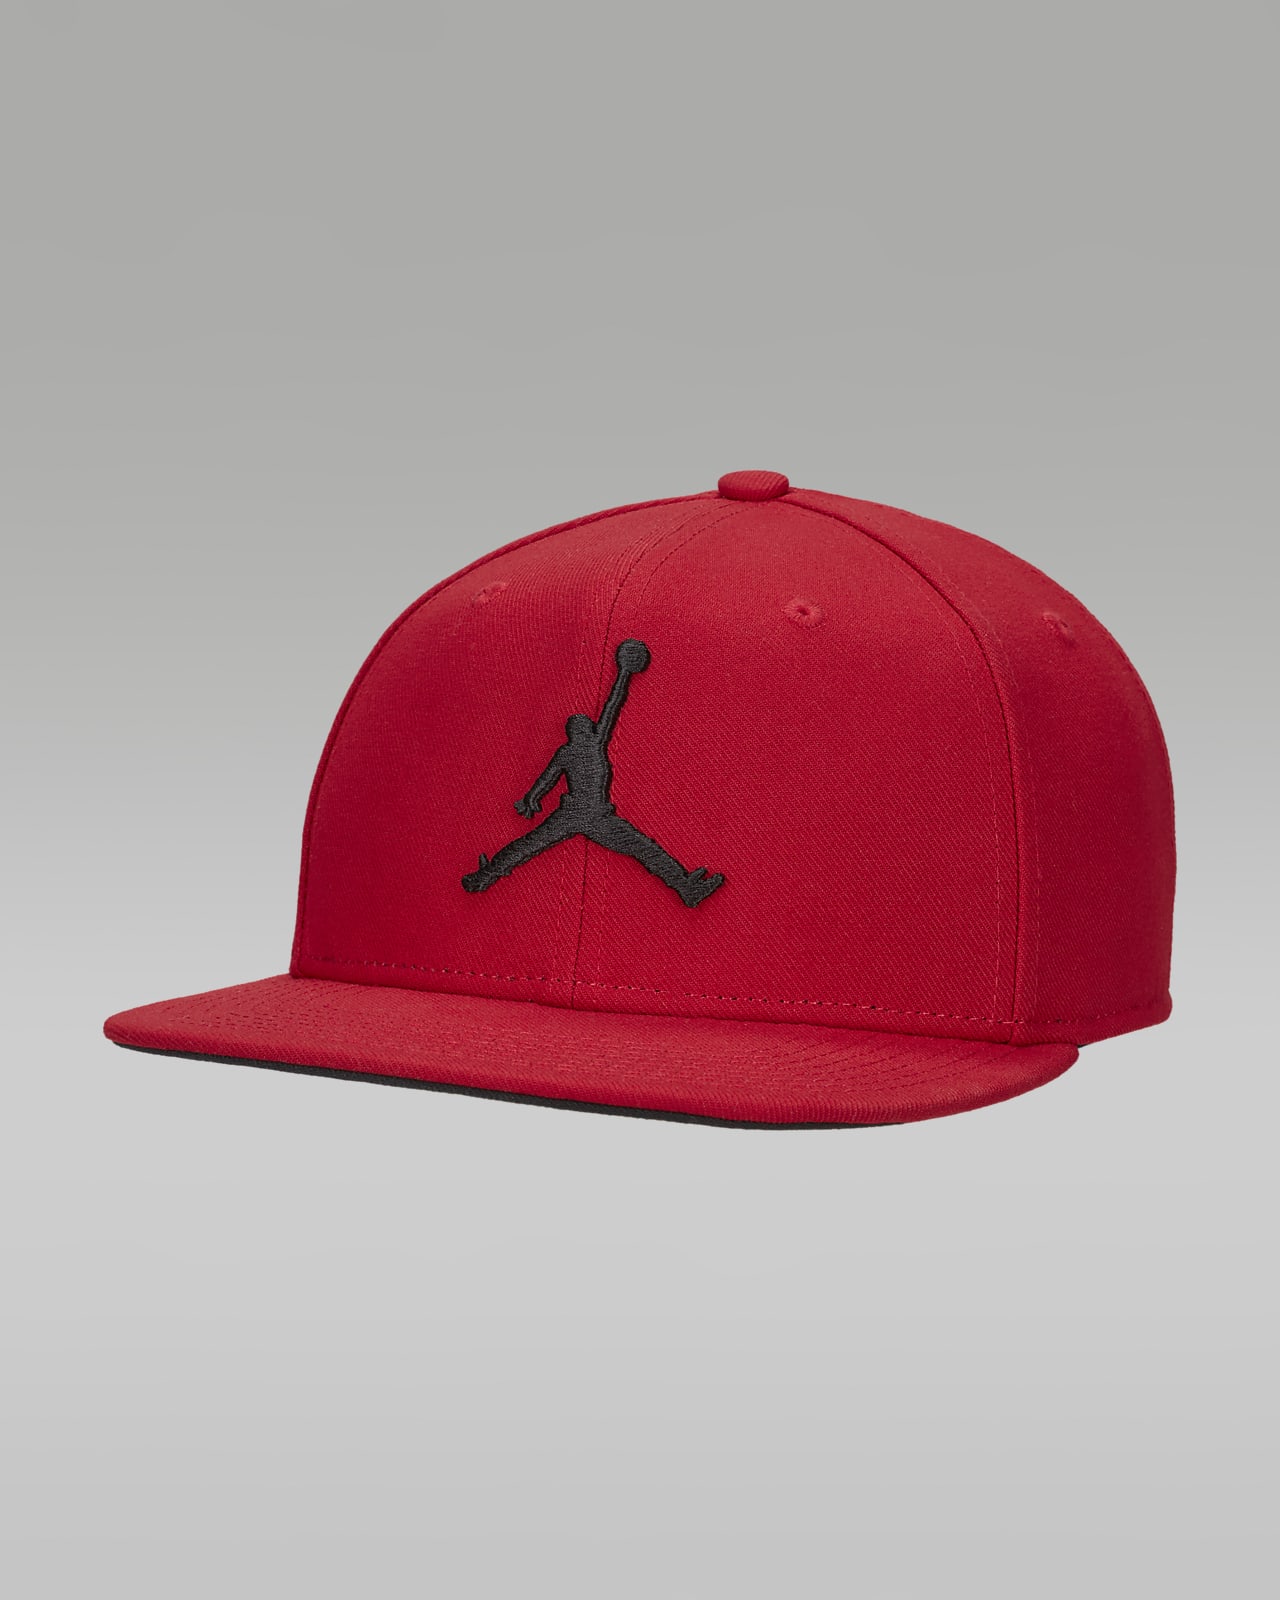 Jordan Pro Cap Adjustable Hat